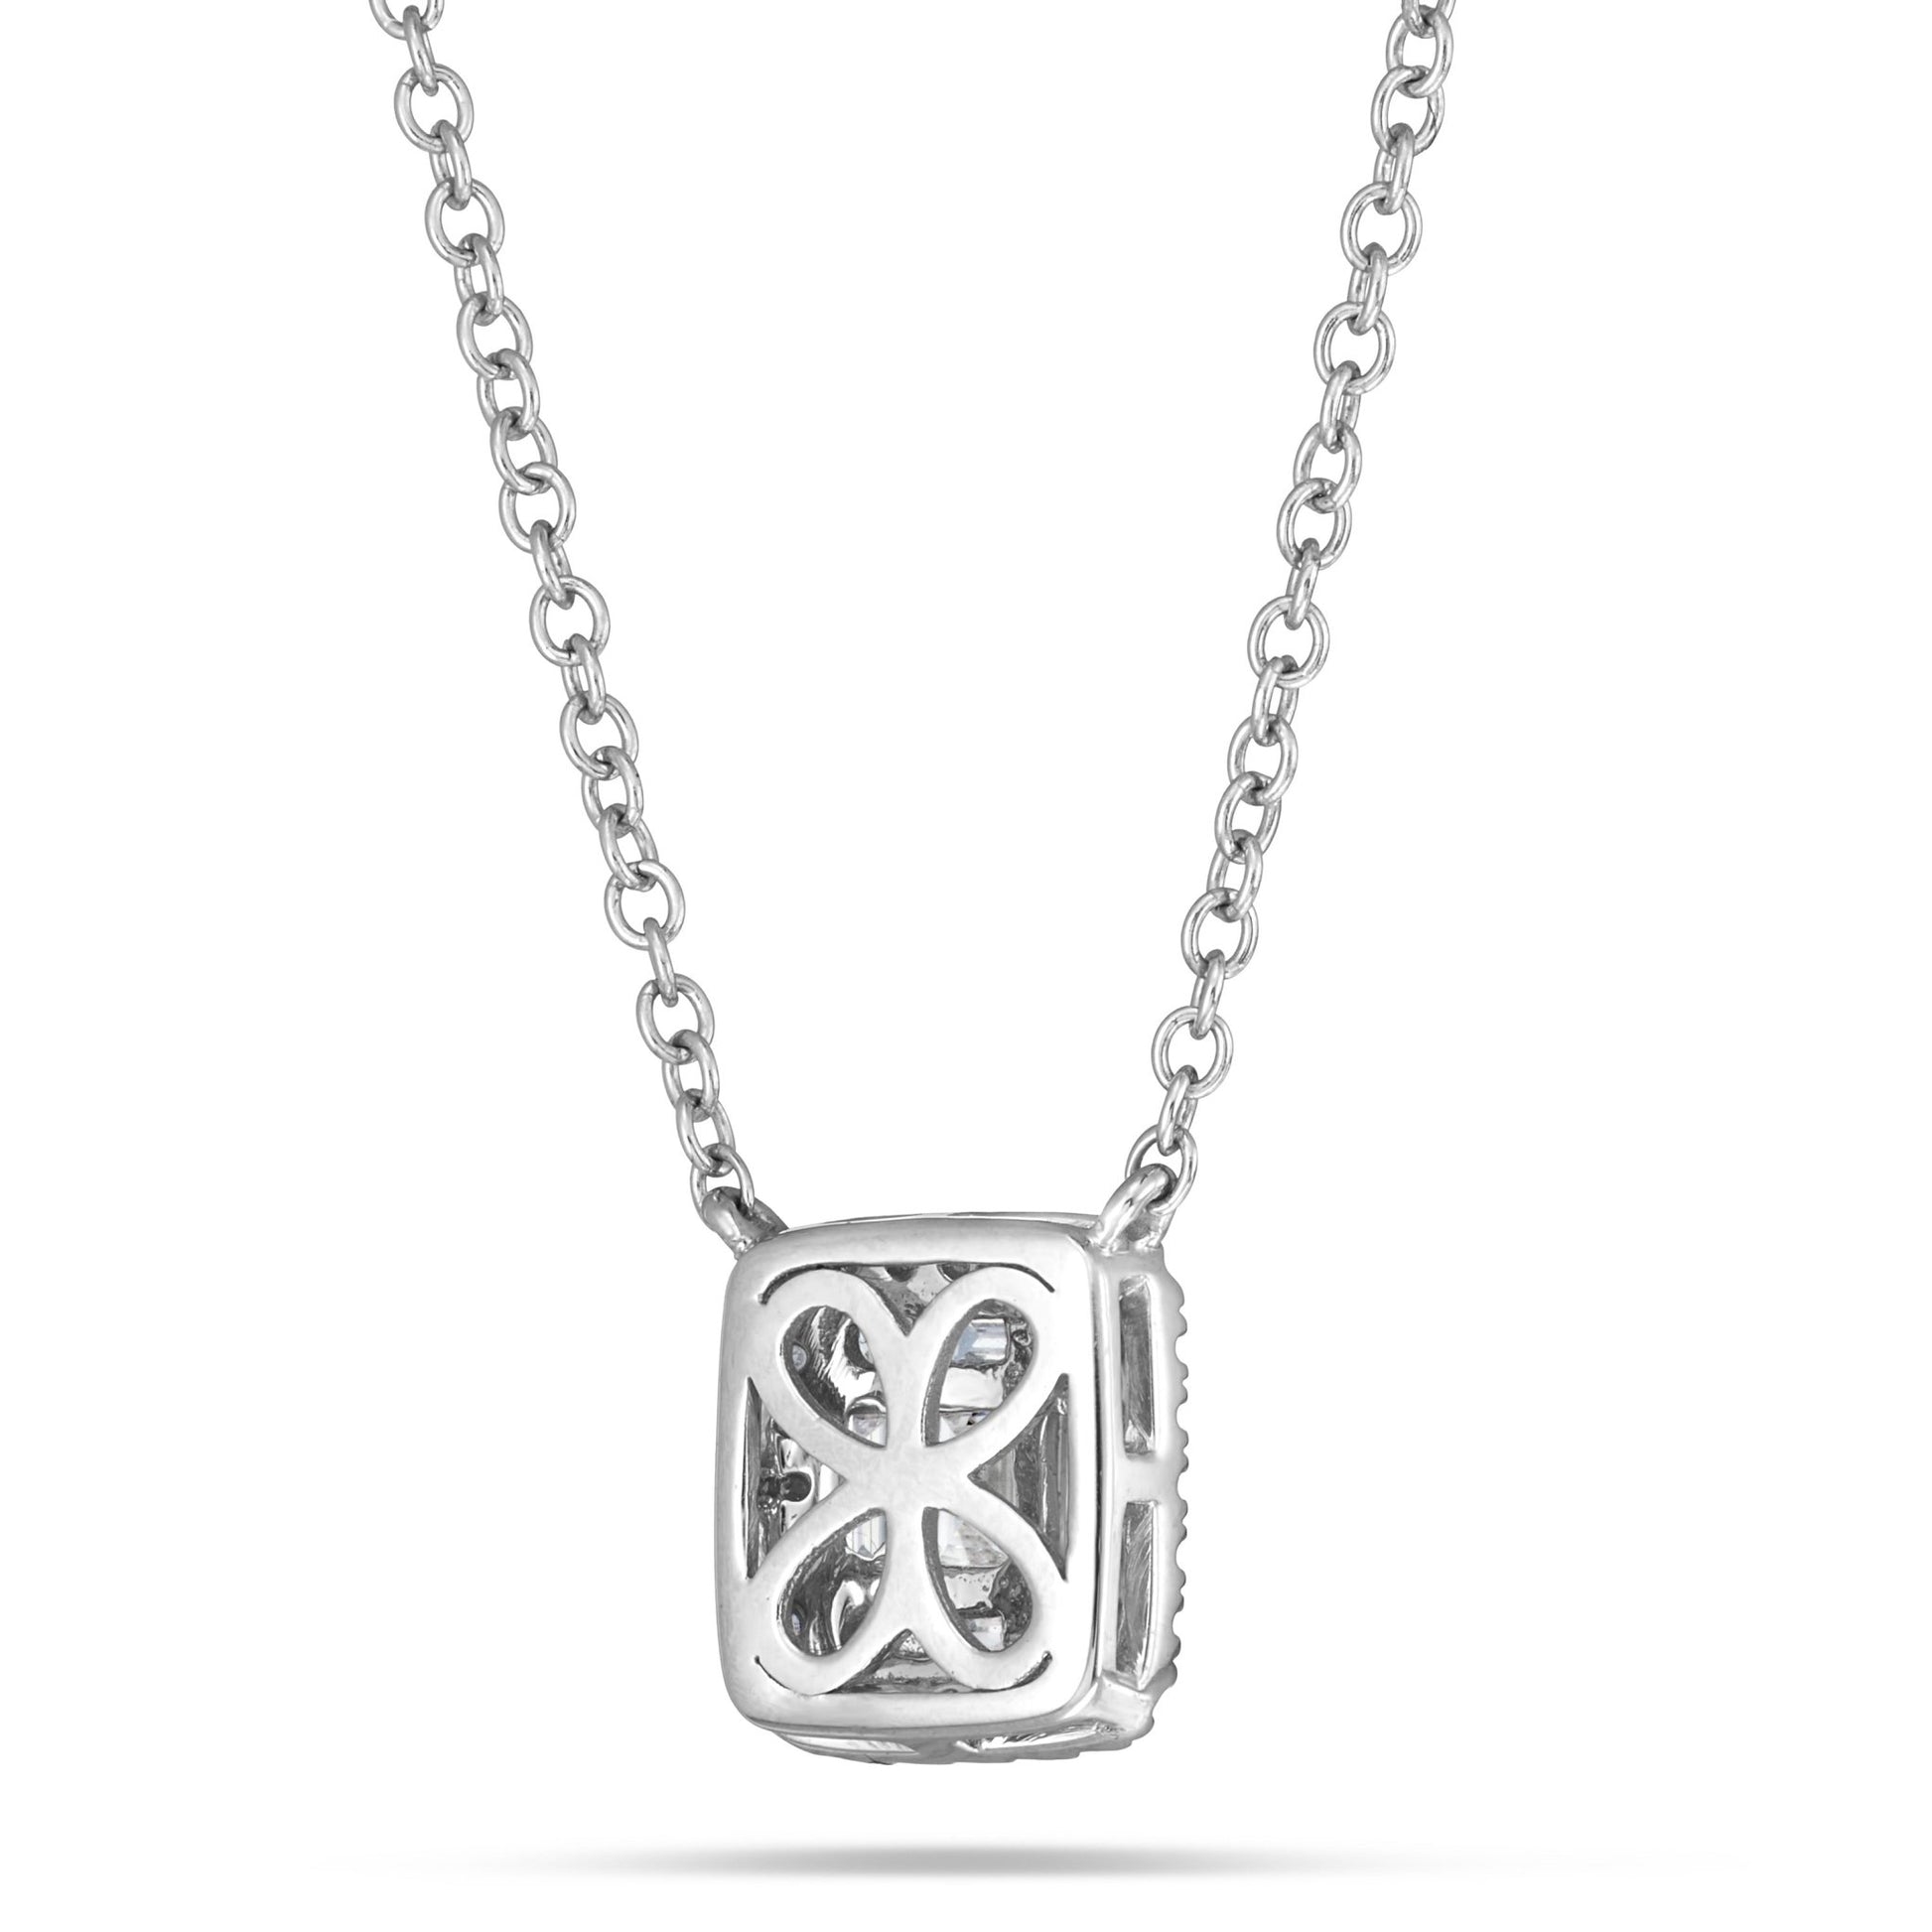 Diamond Baguette Cluster Necklace - Shyne Jewelers Shyne Jewelers